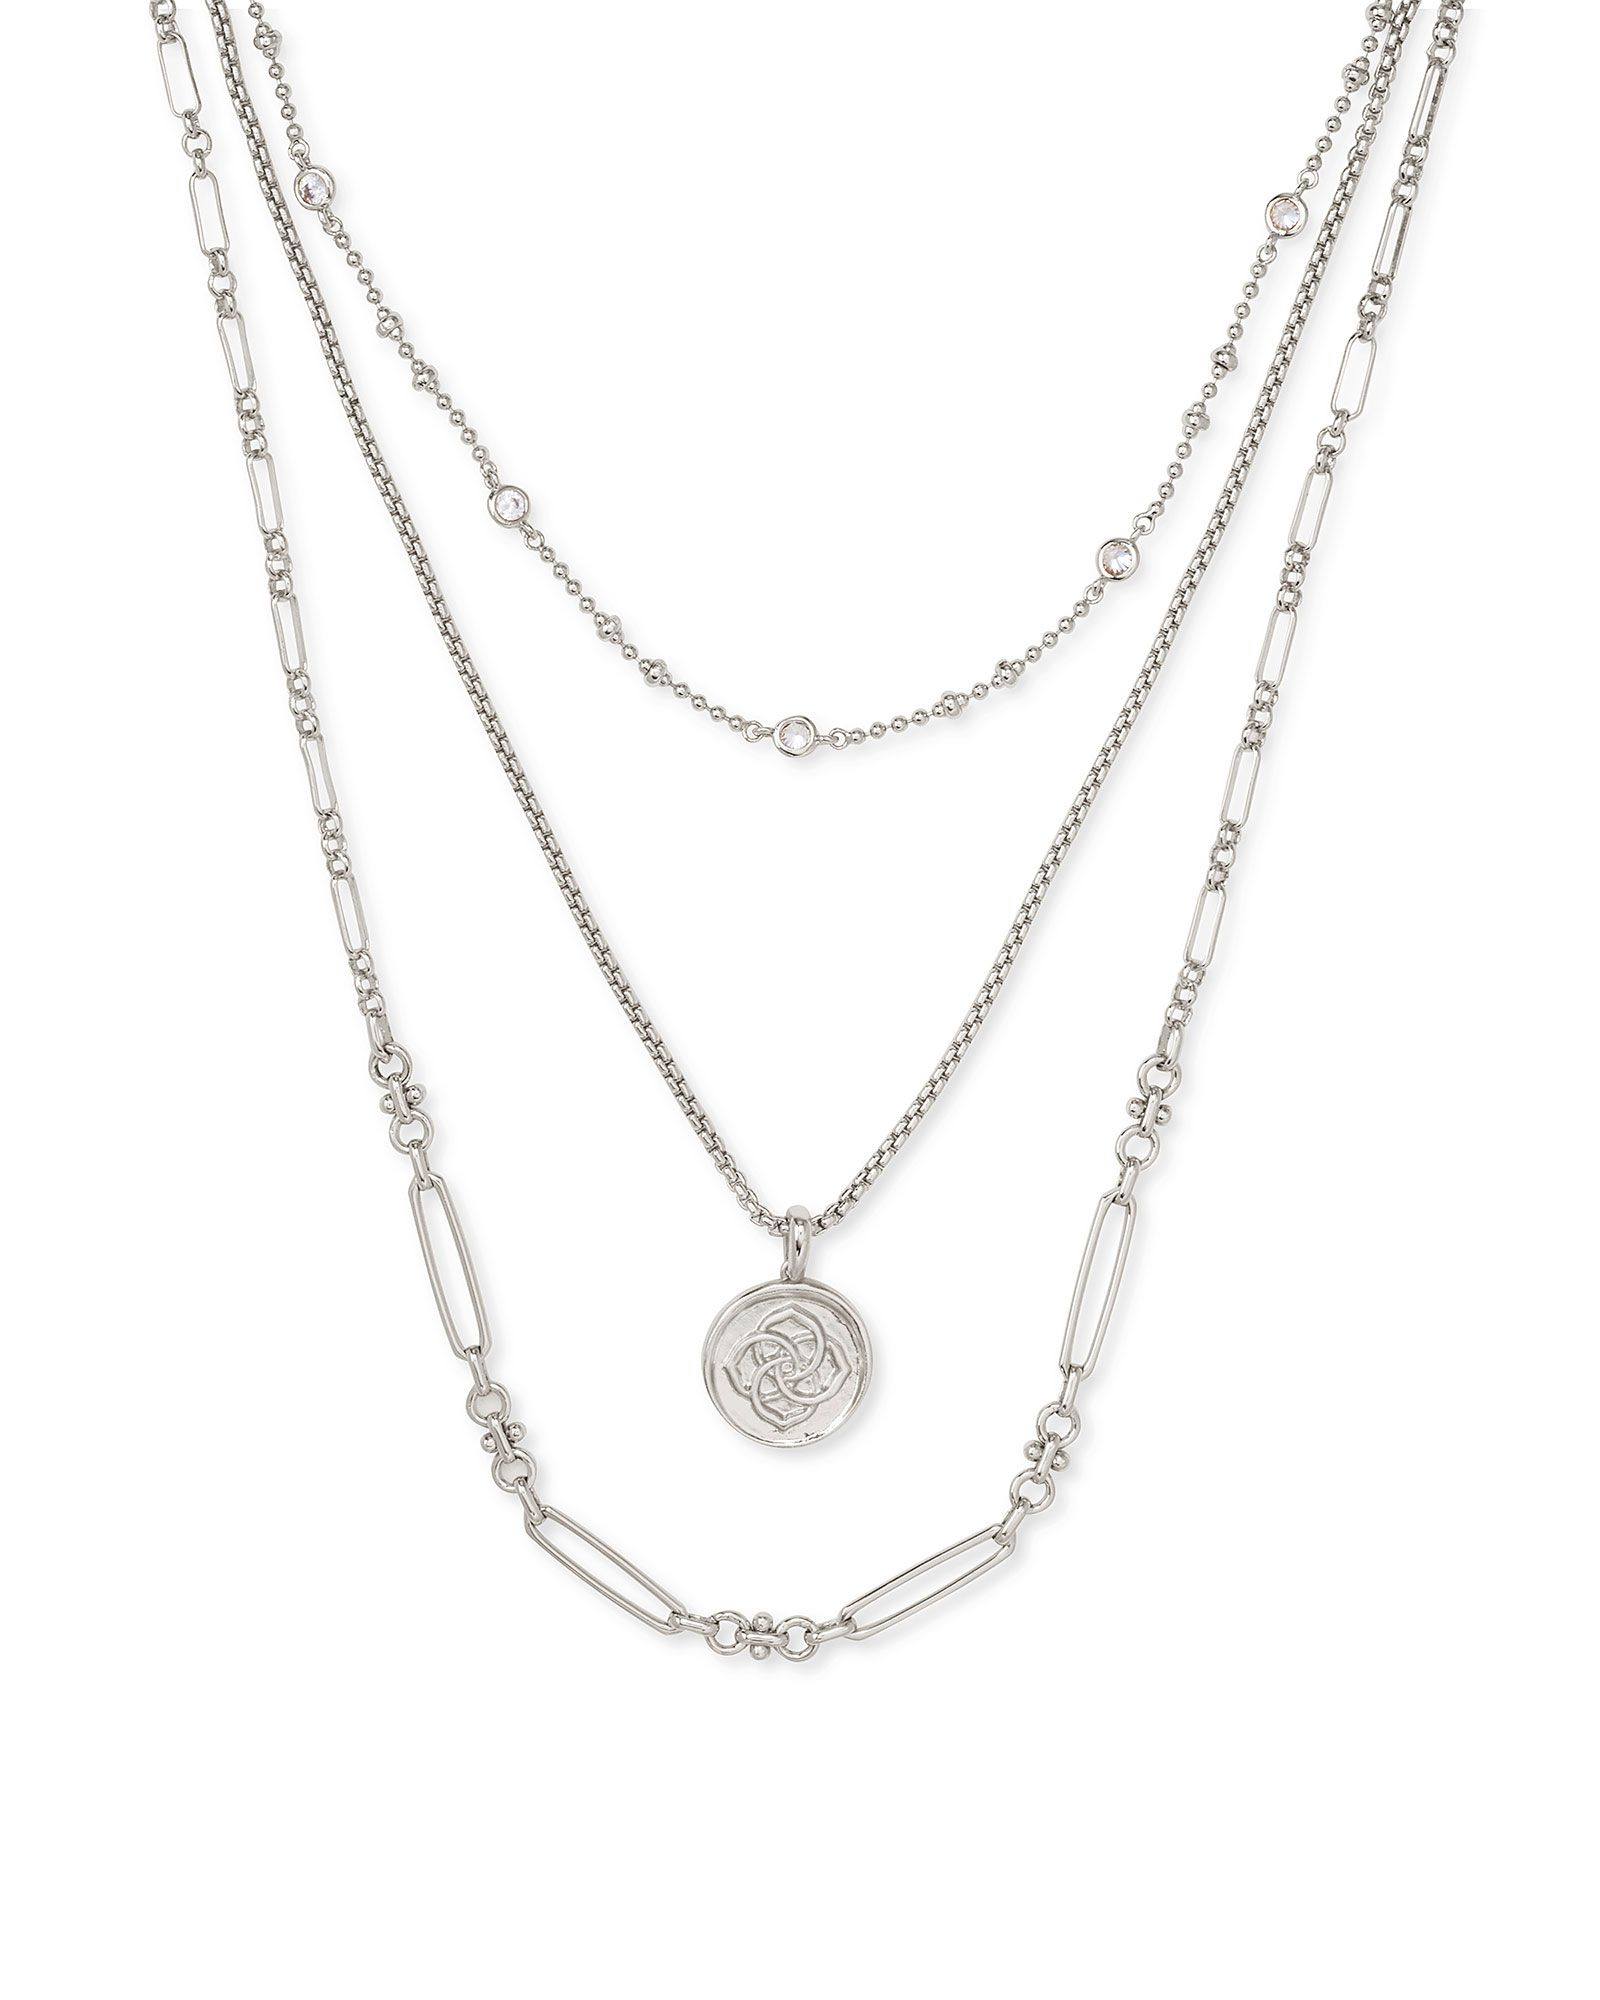 Medallion Coin Multi Strand Necklace in Silver | Kendra Scott | Kendra Scott